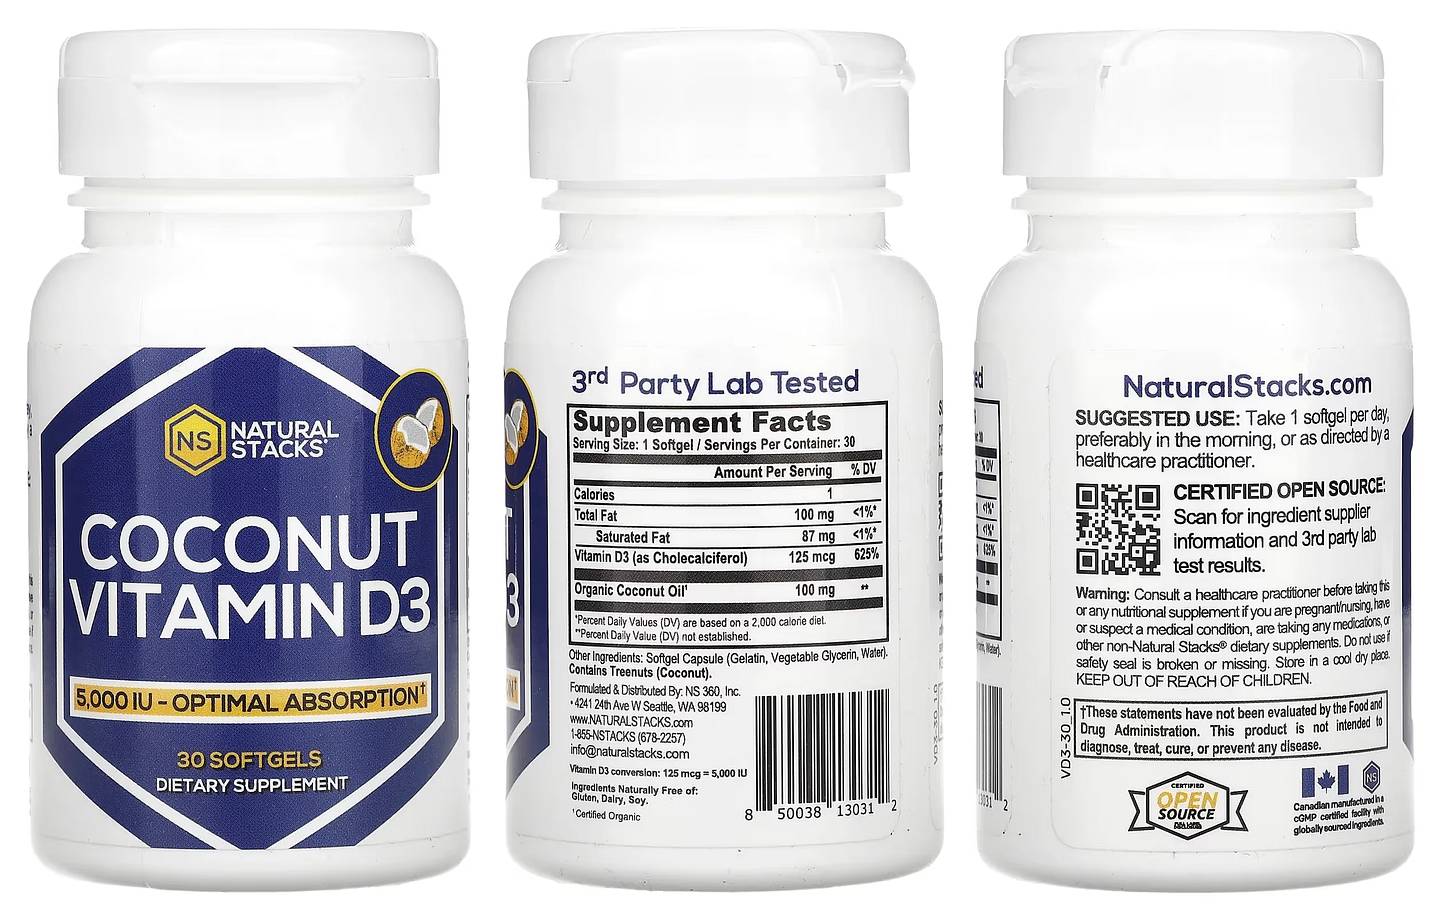 Natural Stacks, Coconut Vitamin D3 packaging